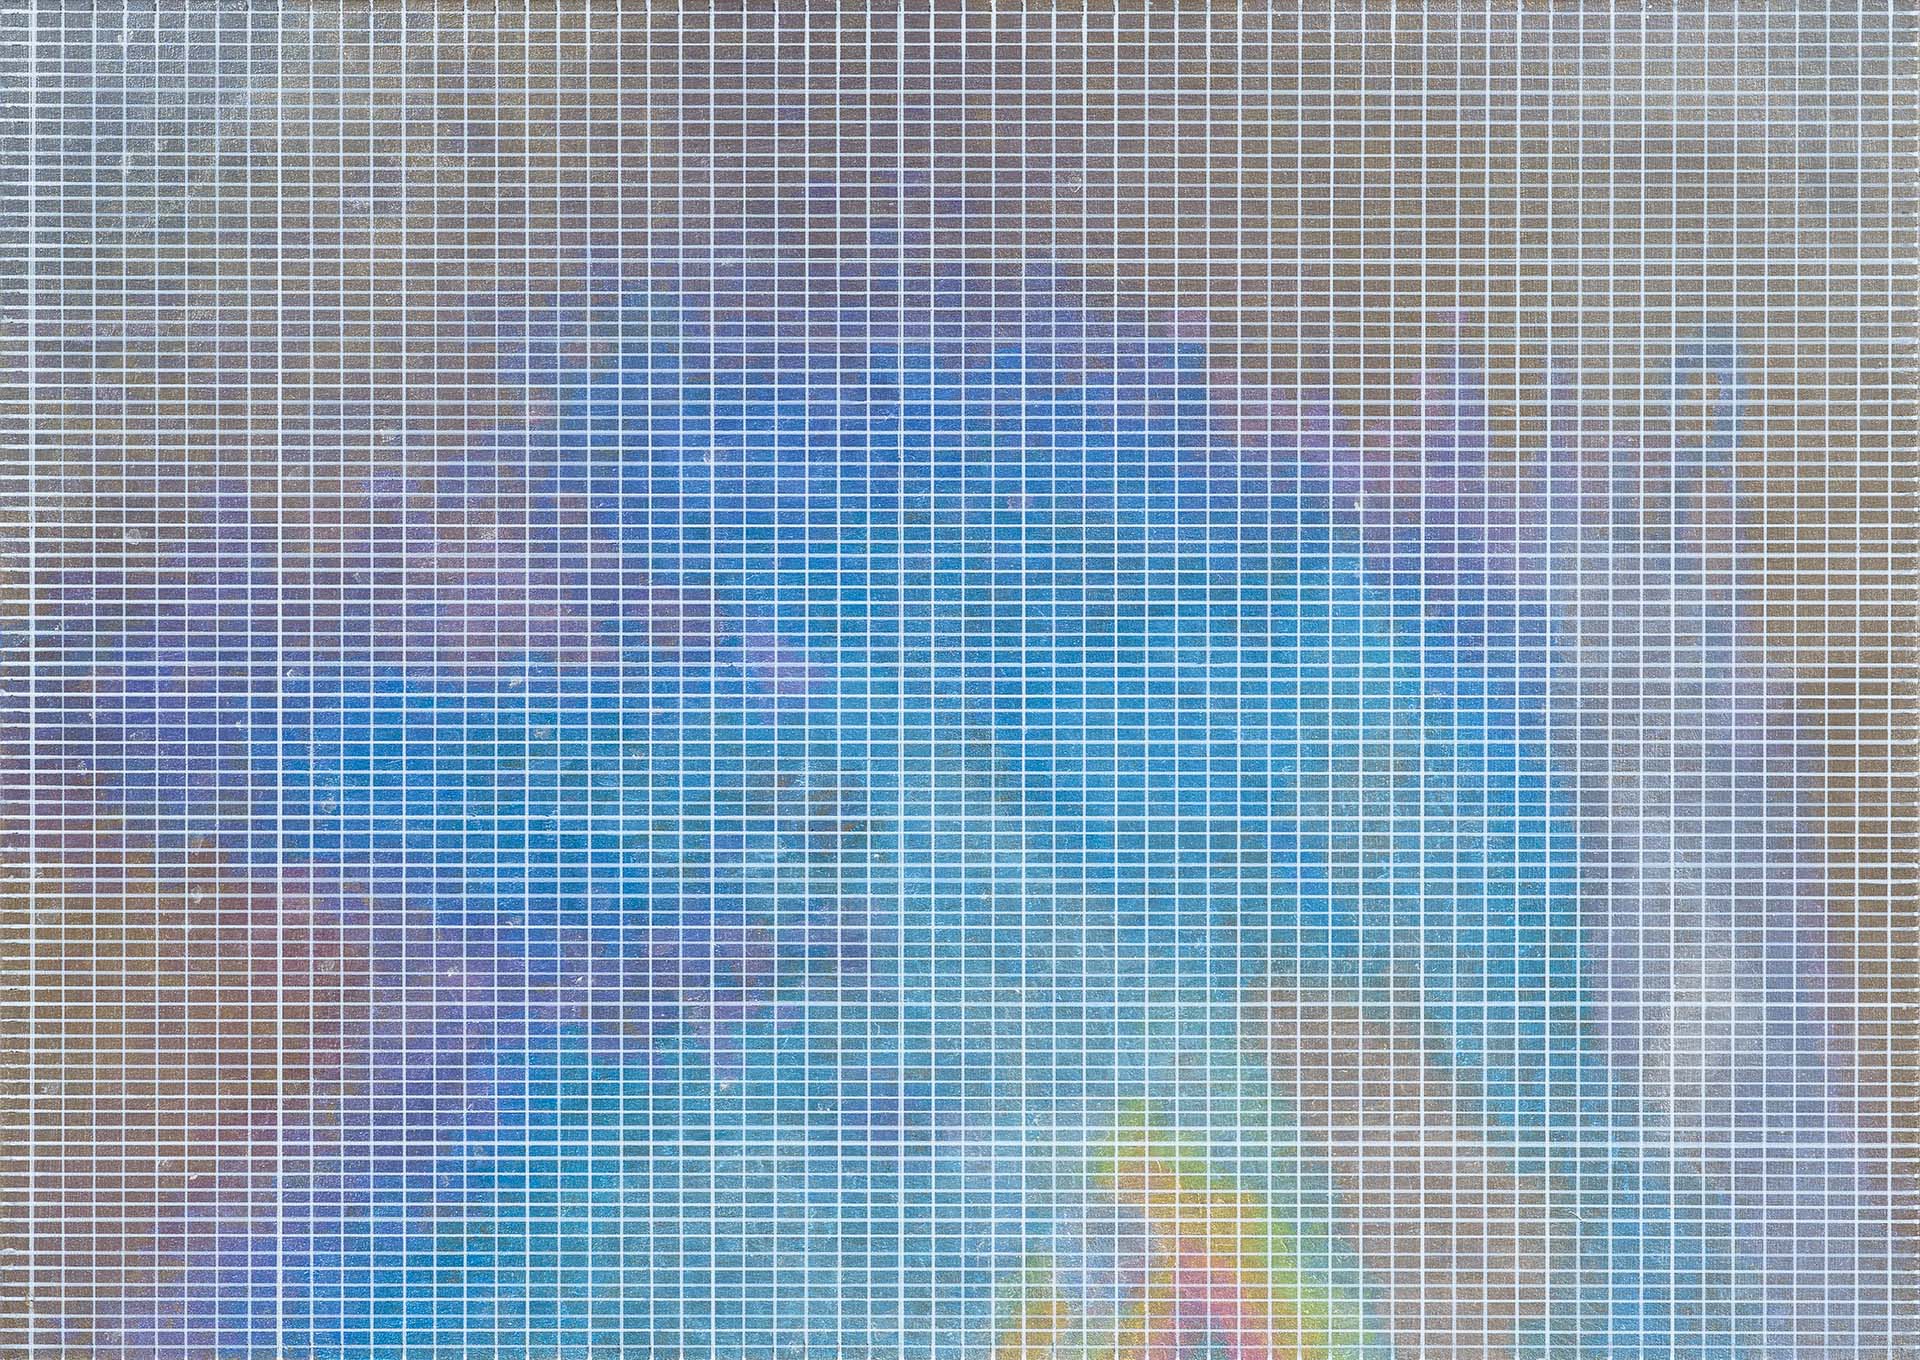 Oil Slick with Grid 2, 2020, acrylic on bristol board, 220 x 310mm. Photo: Sam Hartnett